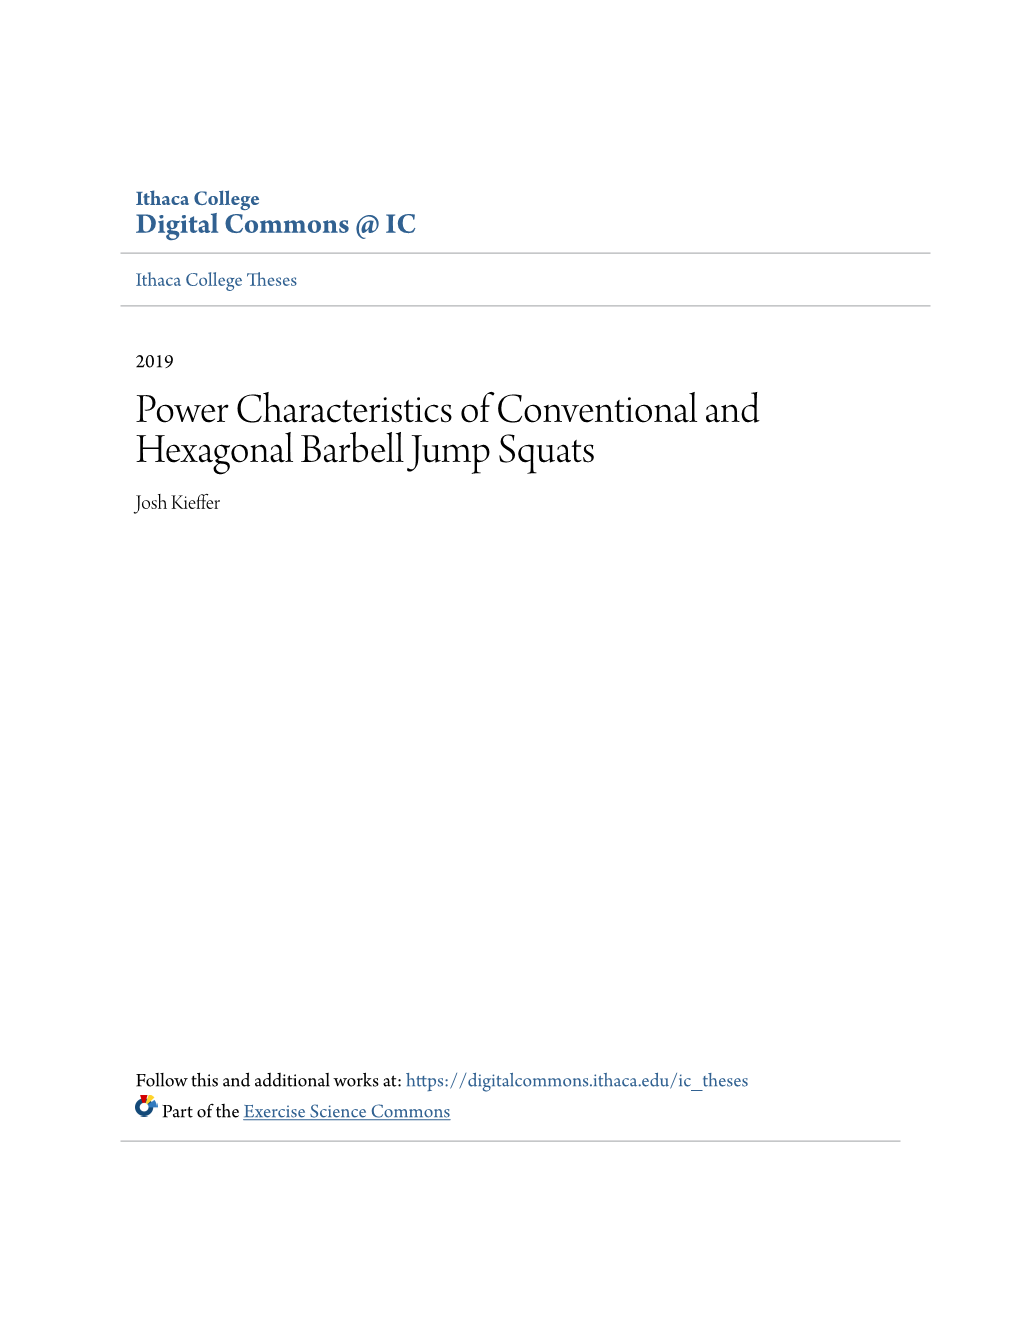 Power Characteristics of Conventional and Hexagonal Barbell Jump Squats Josh Kieffer